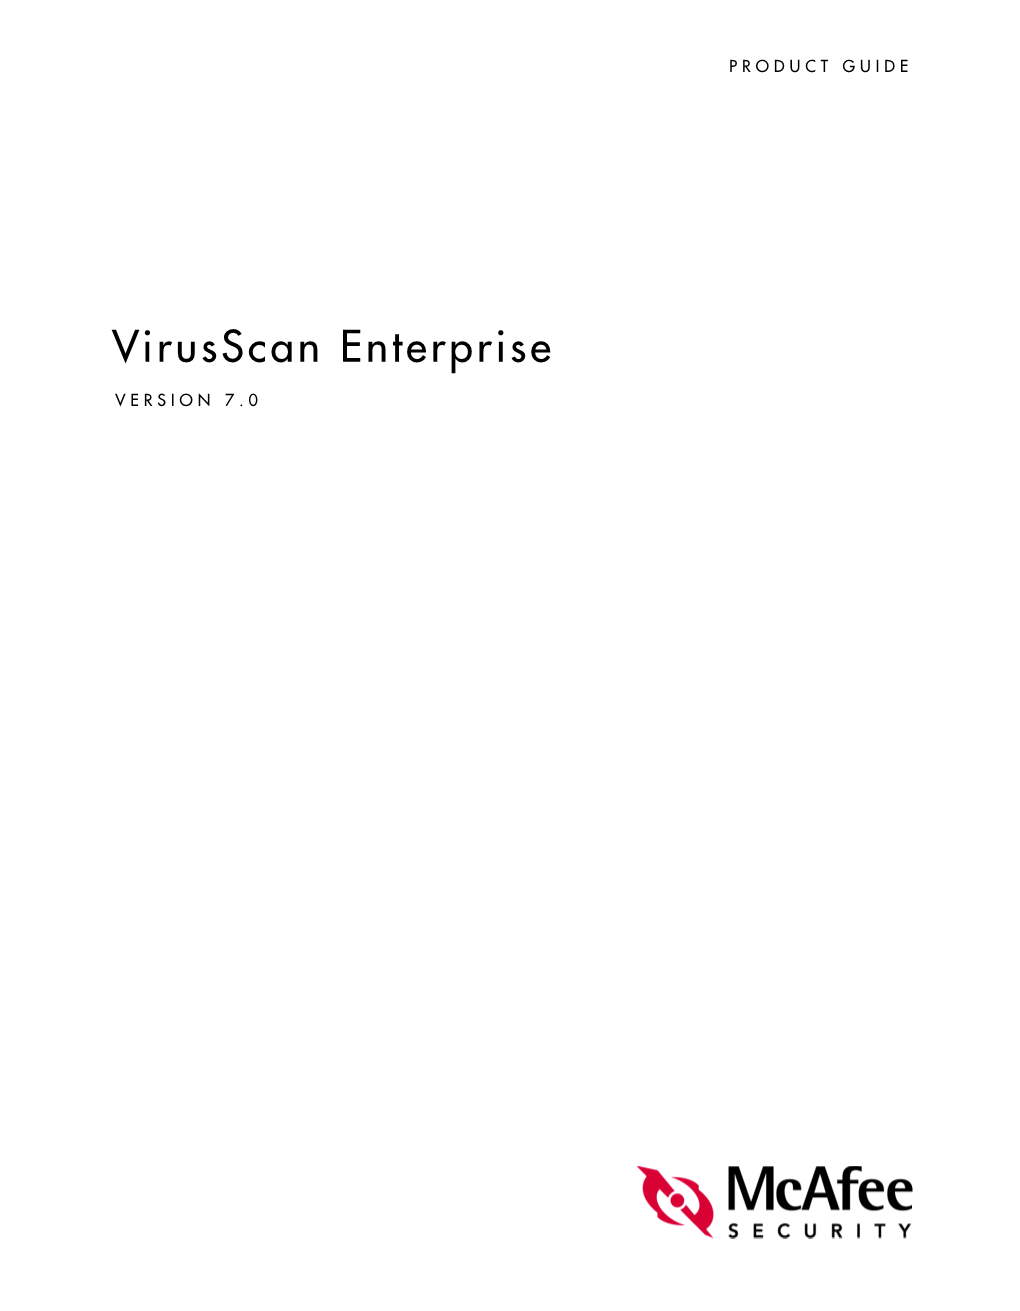 Virusscan Enterprise 7.0 Product Guide